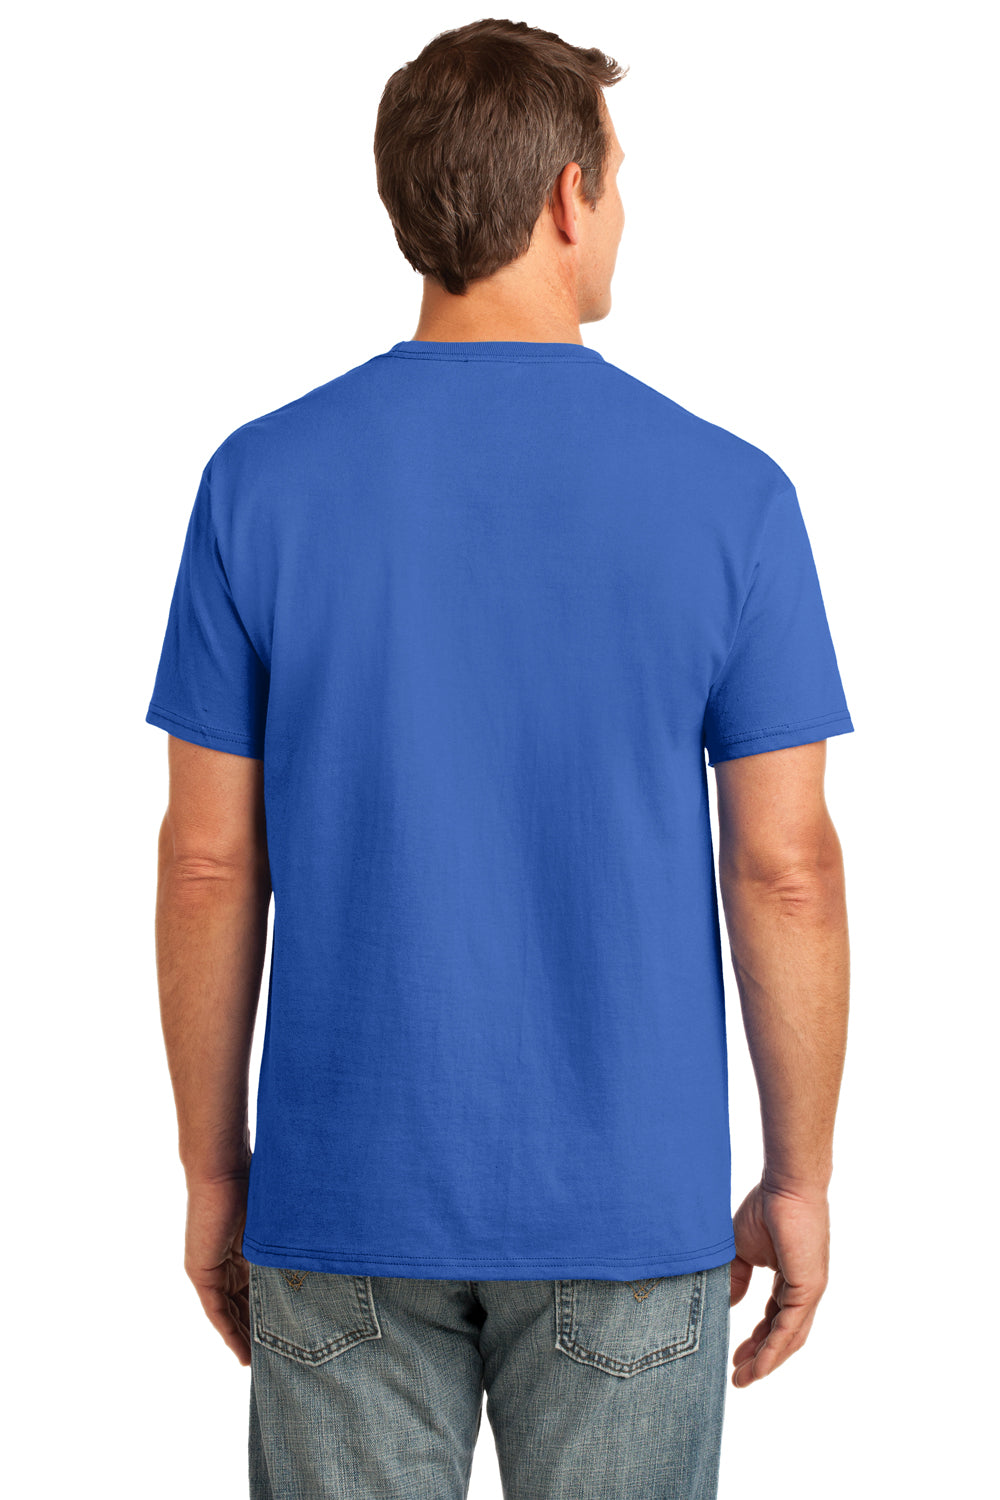 Port & Company PC54P Mens Core Short Sleeve Crewneck T-Shirt w/ Pocket Royal Blue Back